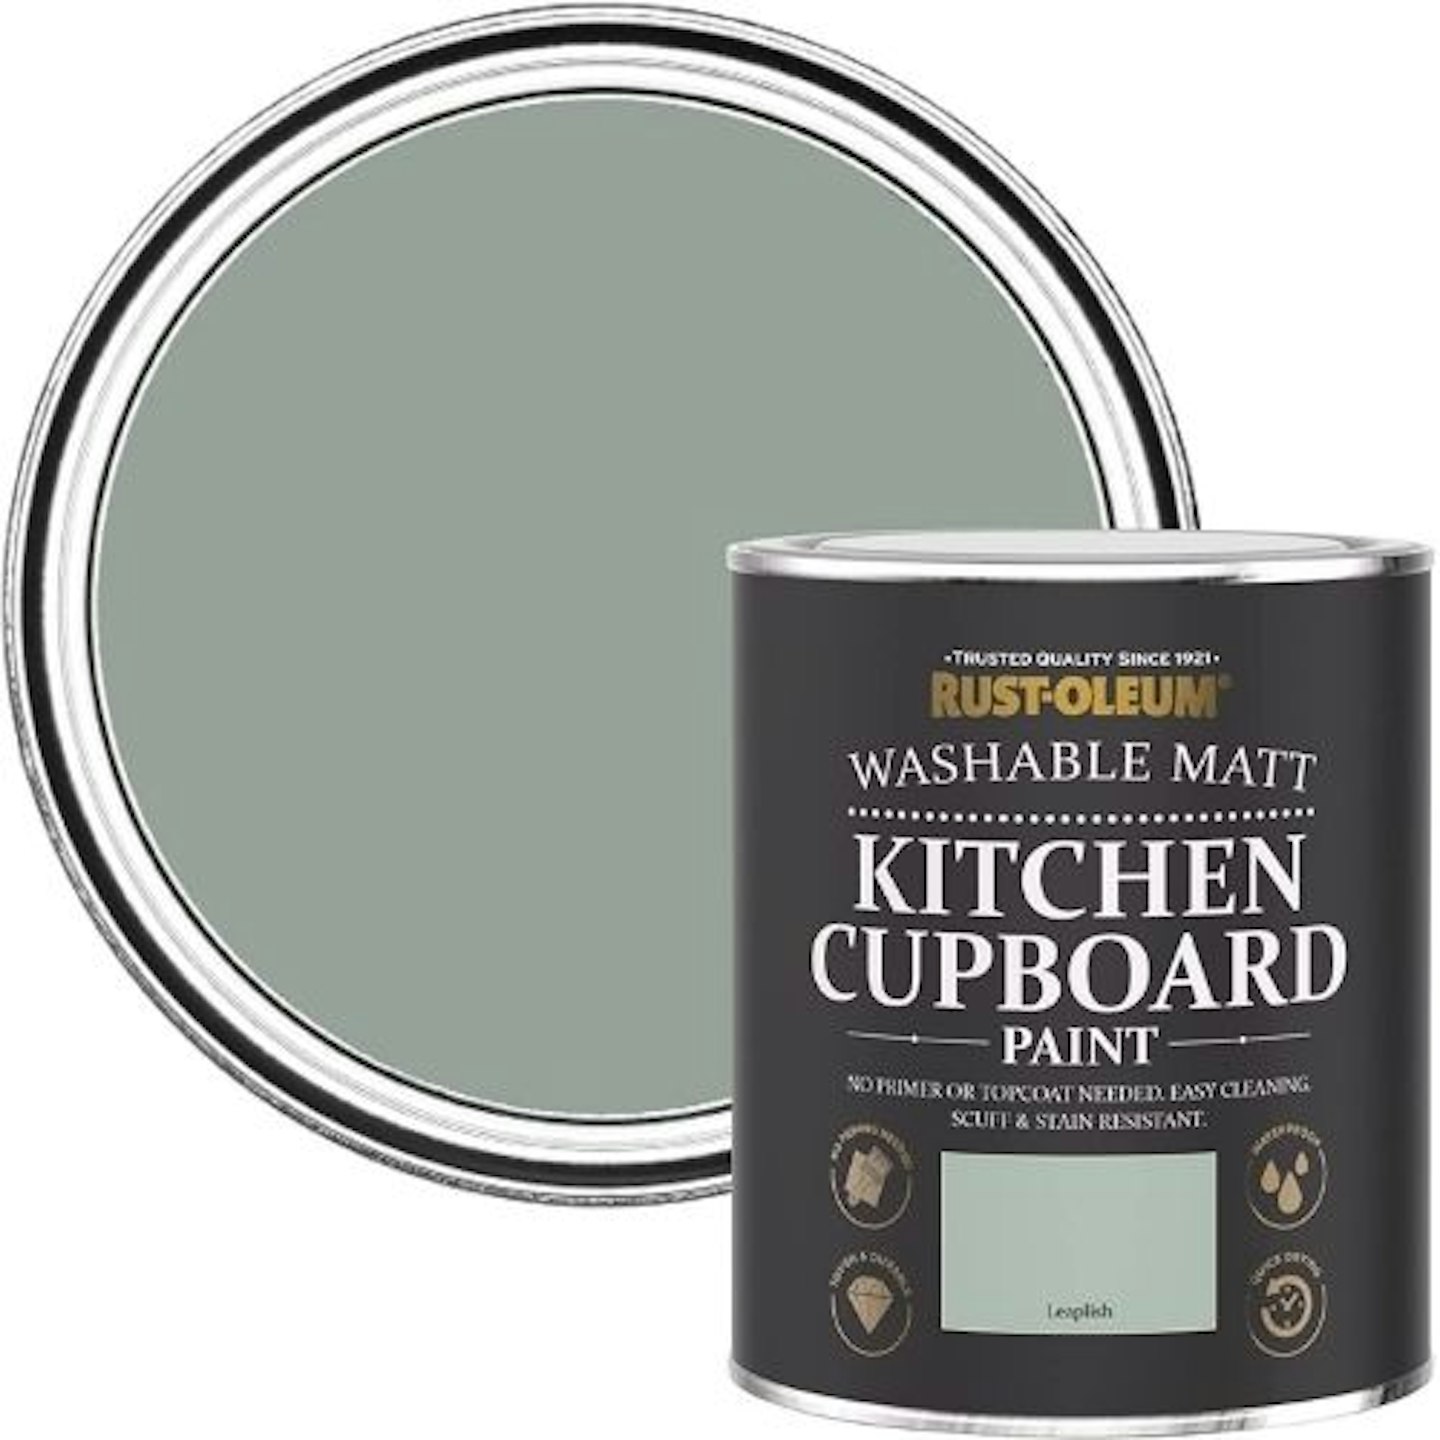 Rust-Oleum Green Kitchen Cupboard Paint in Matt Finish